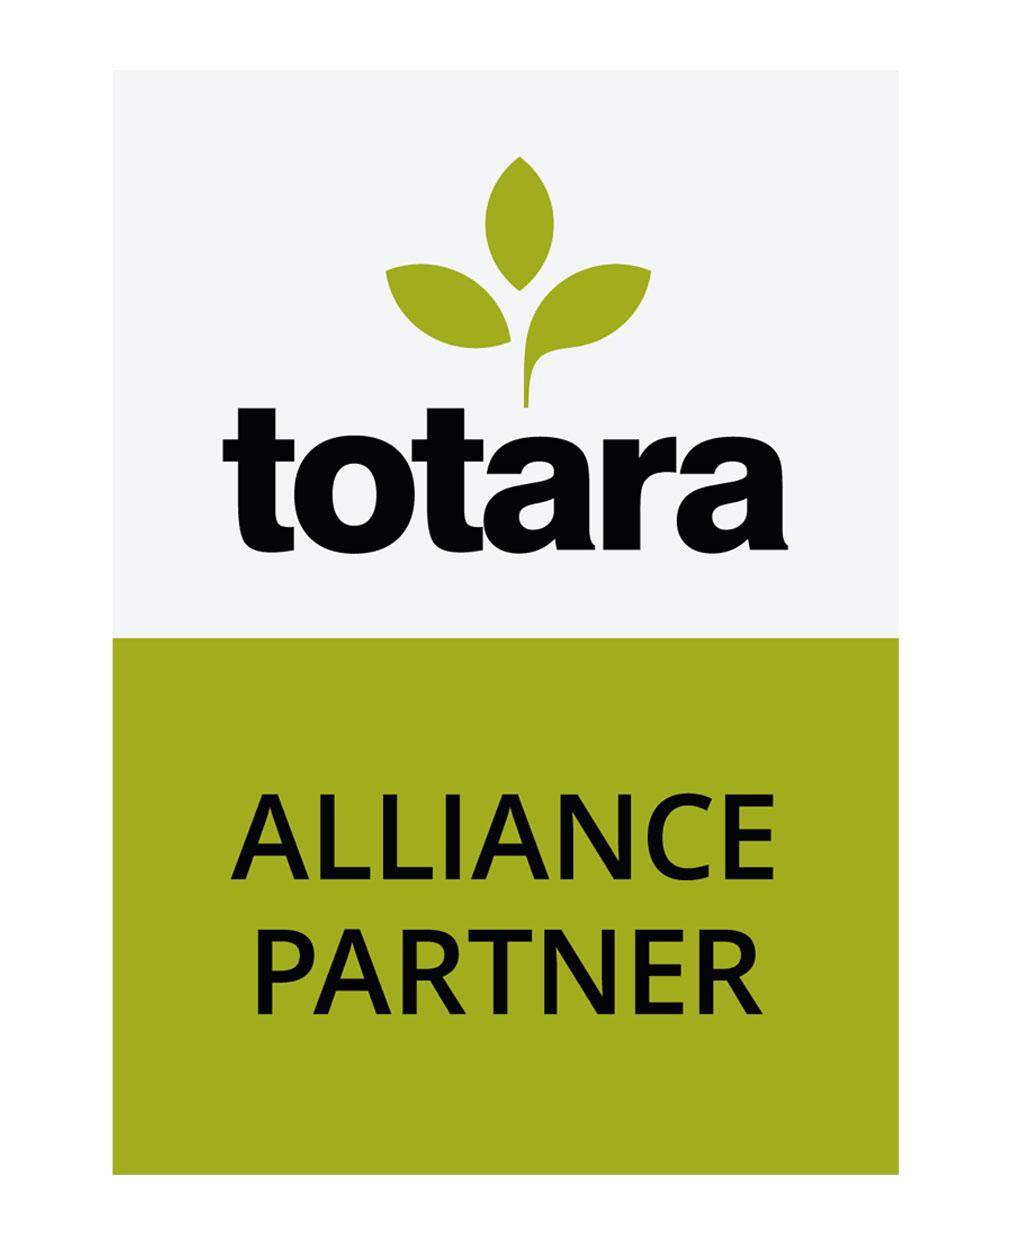 Tōtara alliance partner image